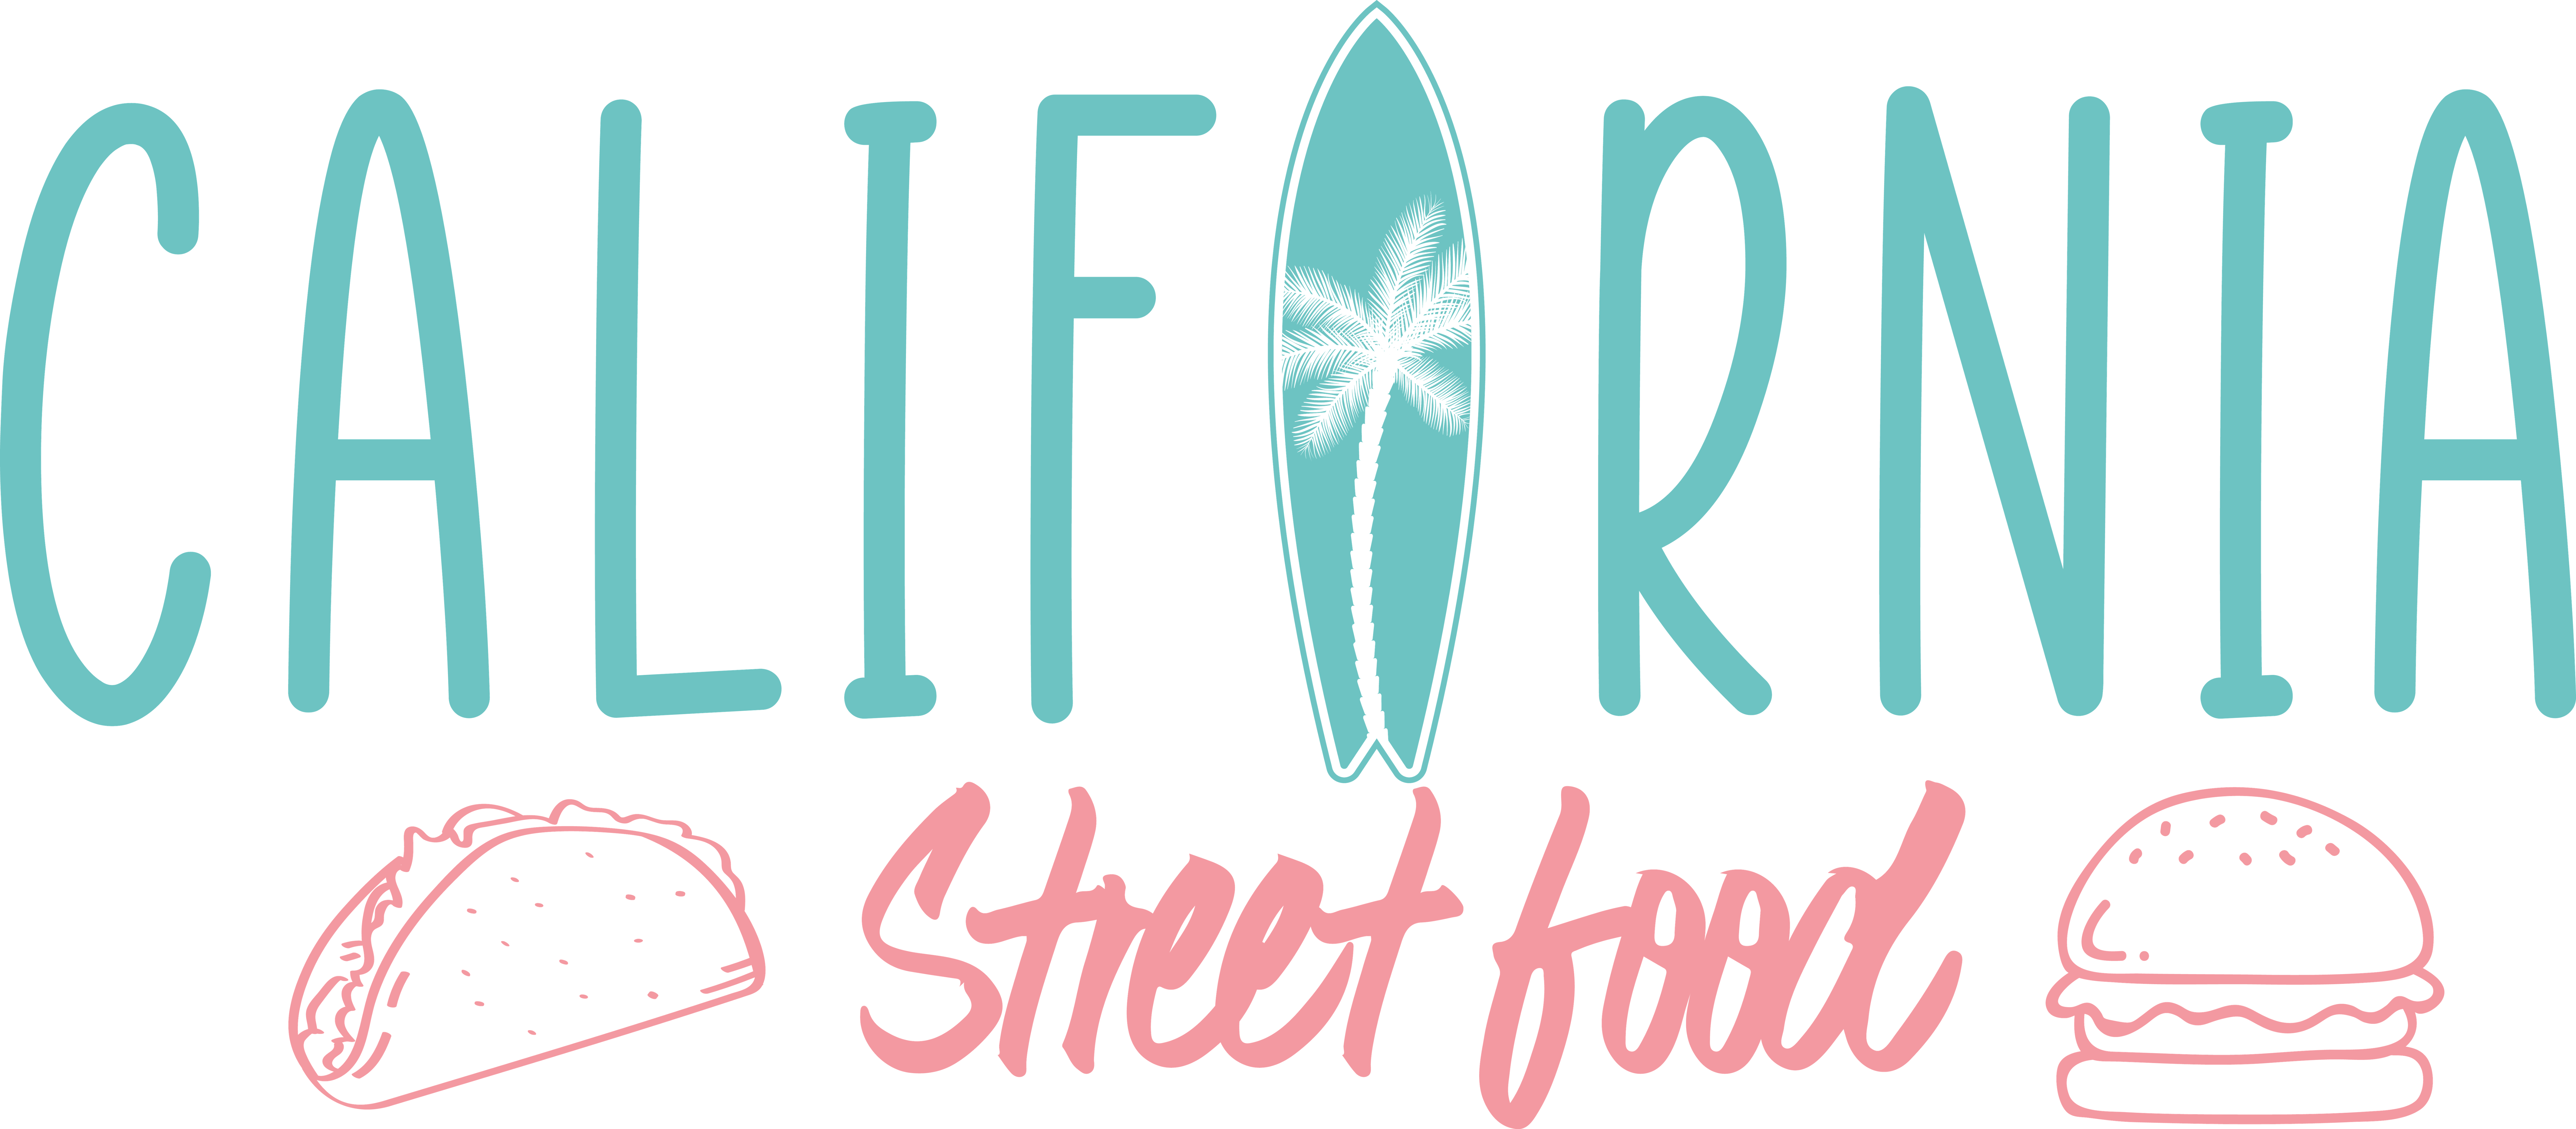 logo california street food